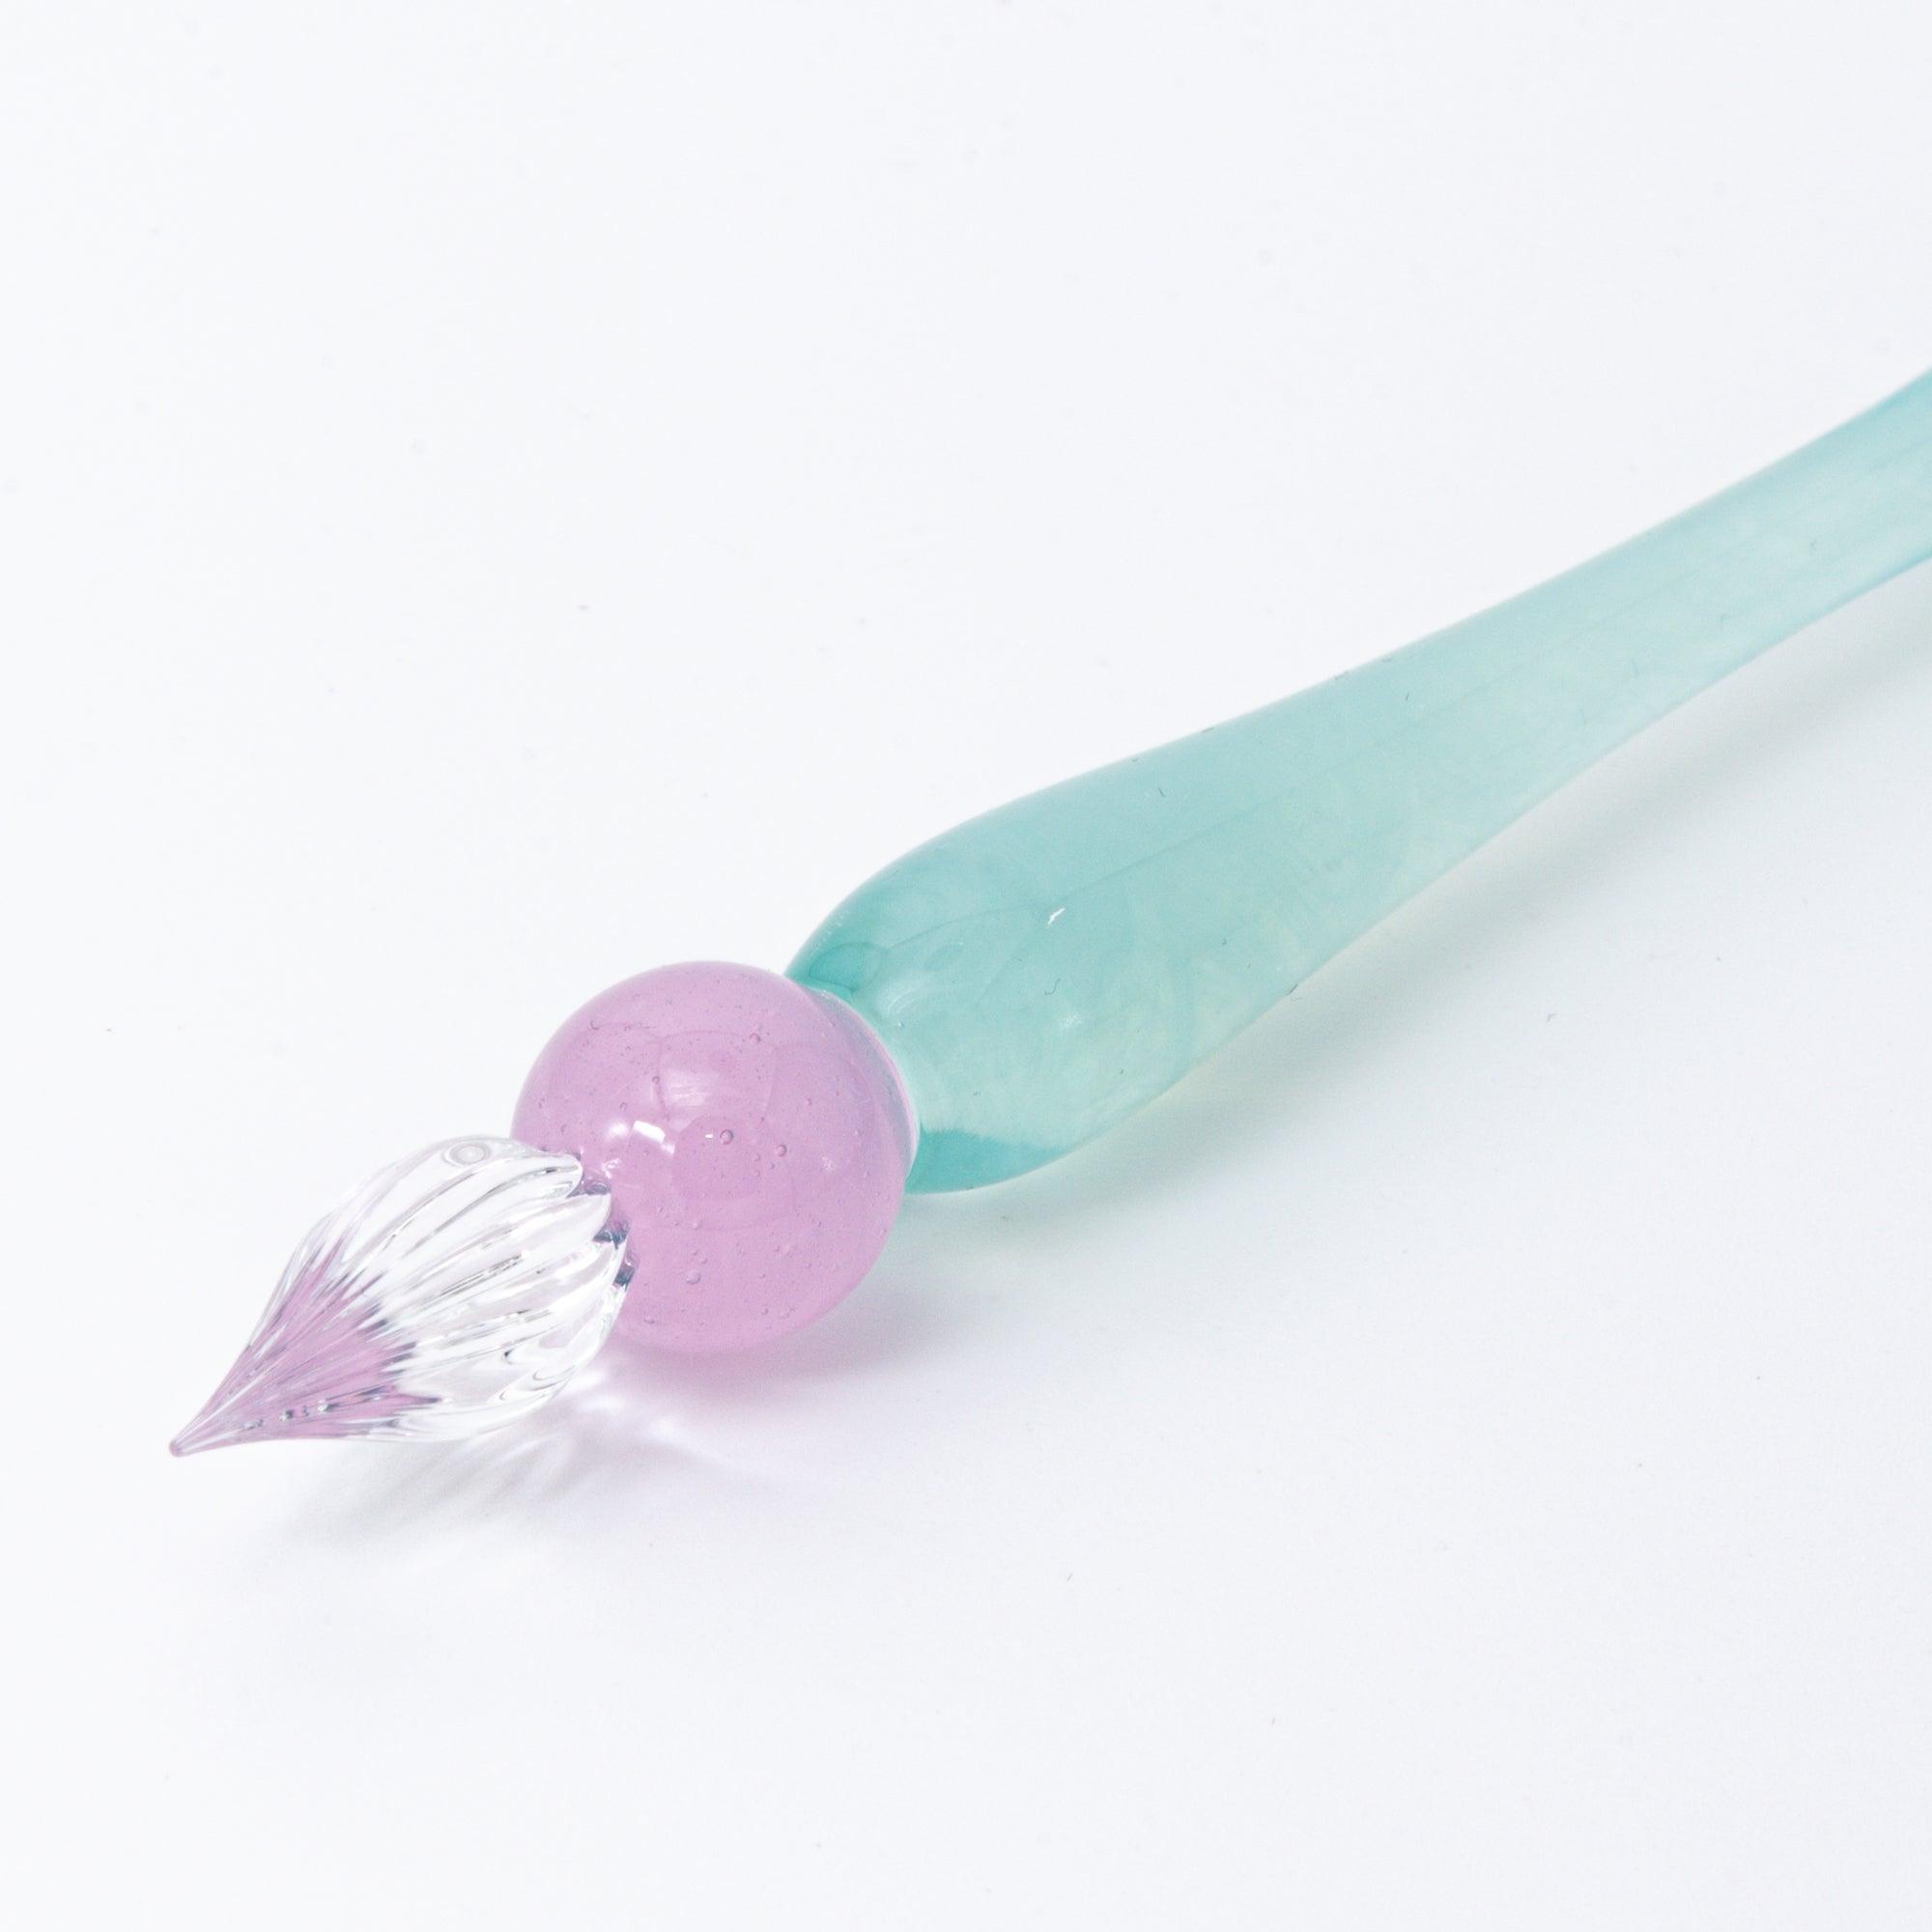 King's Scepter Candy Glass Dip Pen - Guridrops - Japanese Stationery - Komorebi Stationery